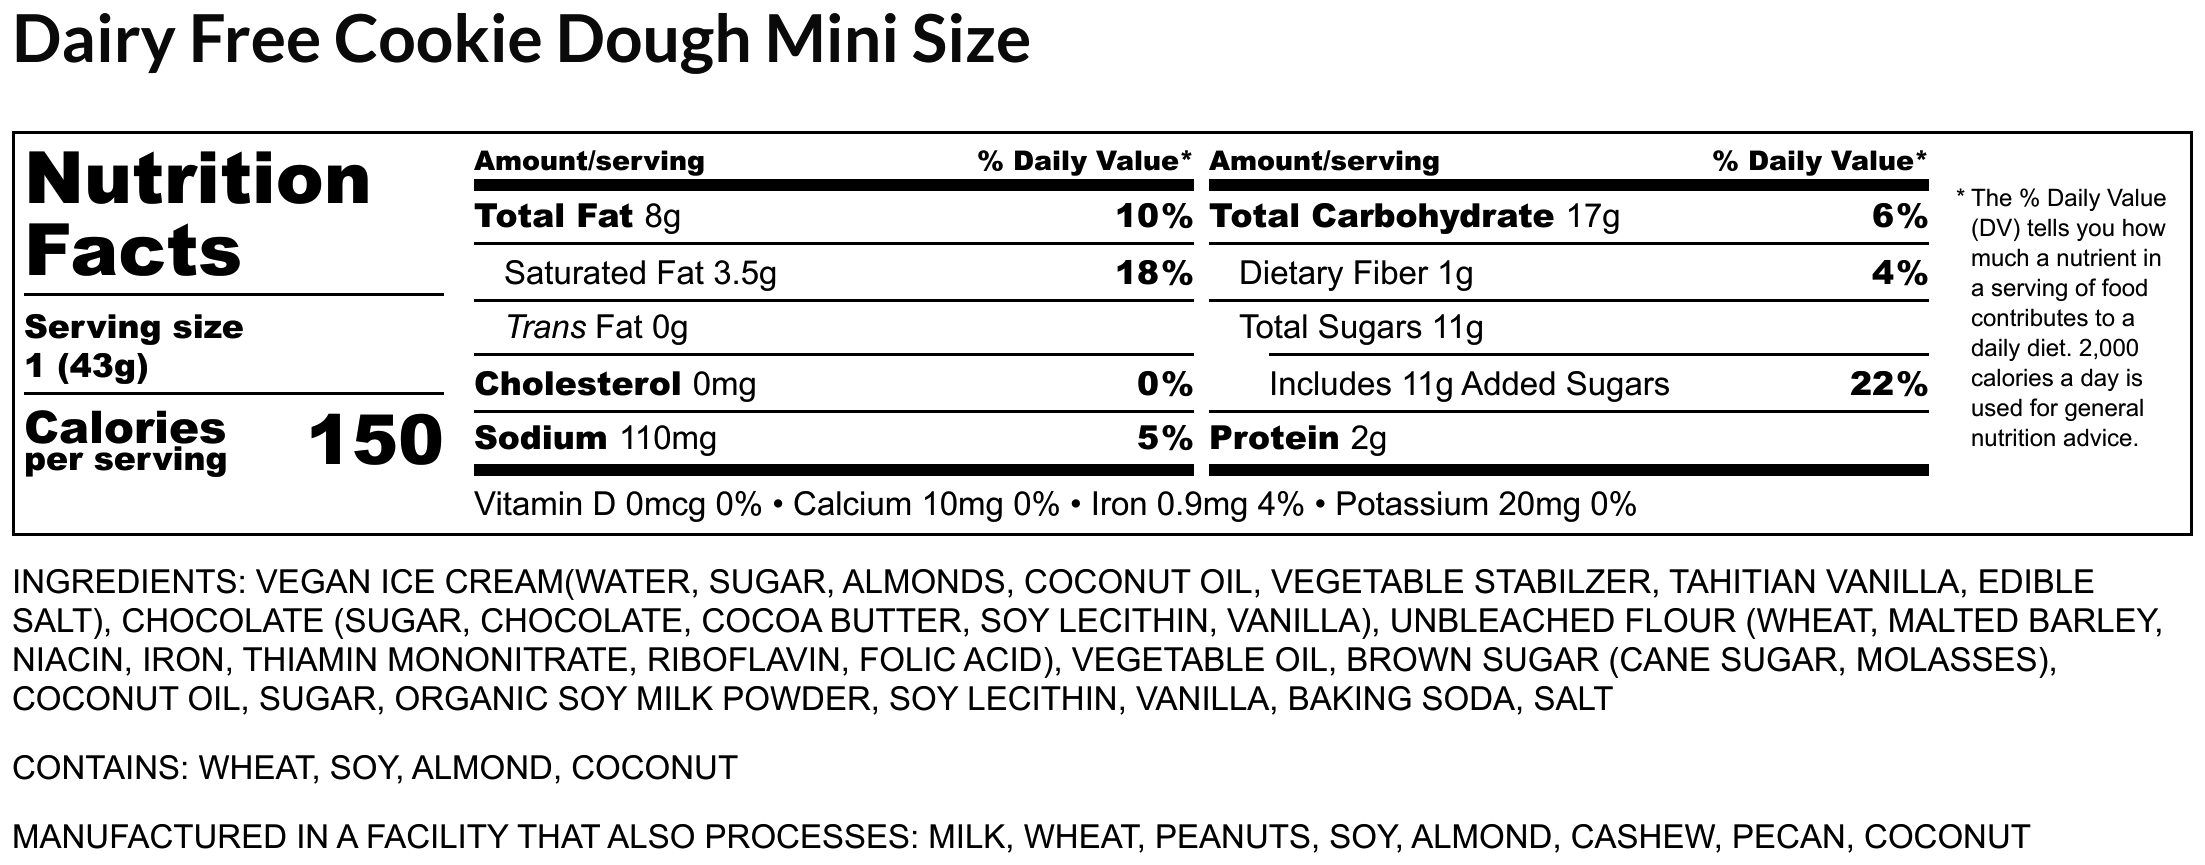 Dairy Free Cookie Dough Mini Size